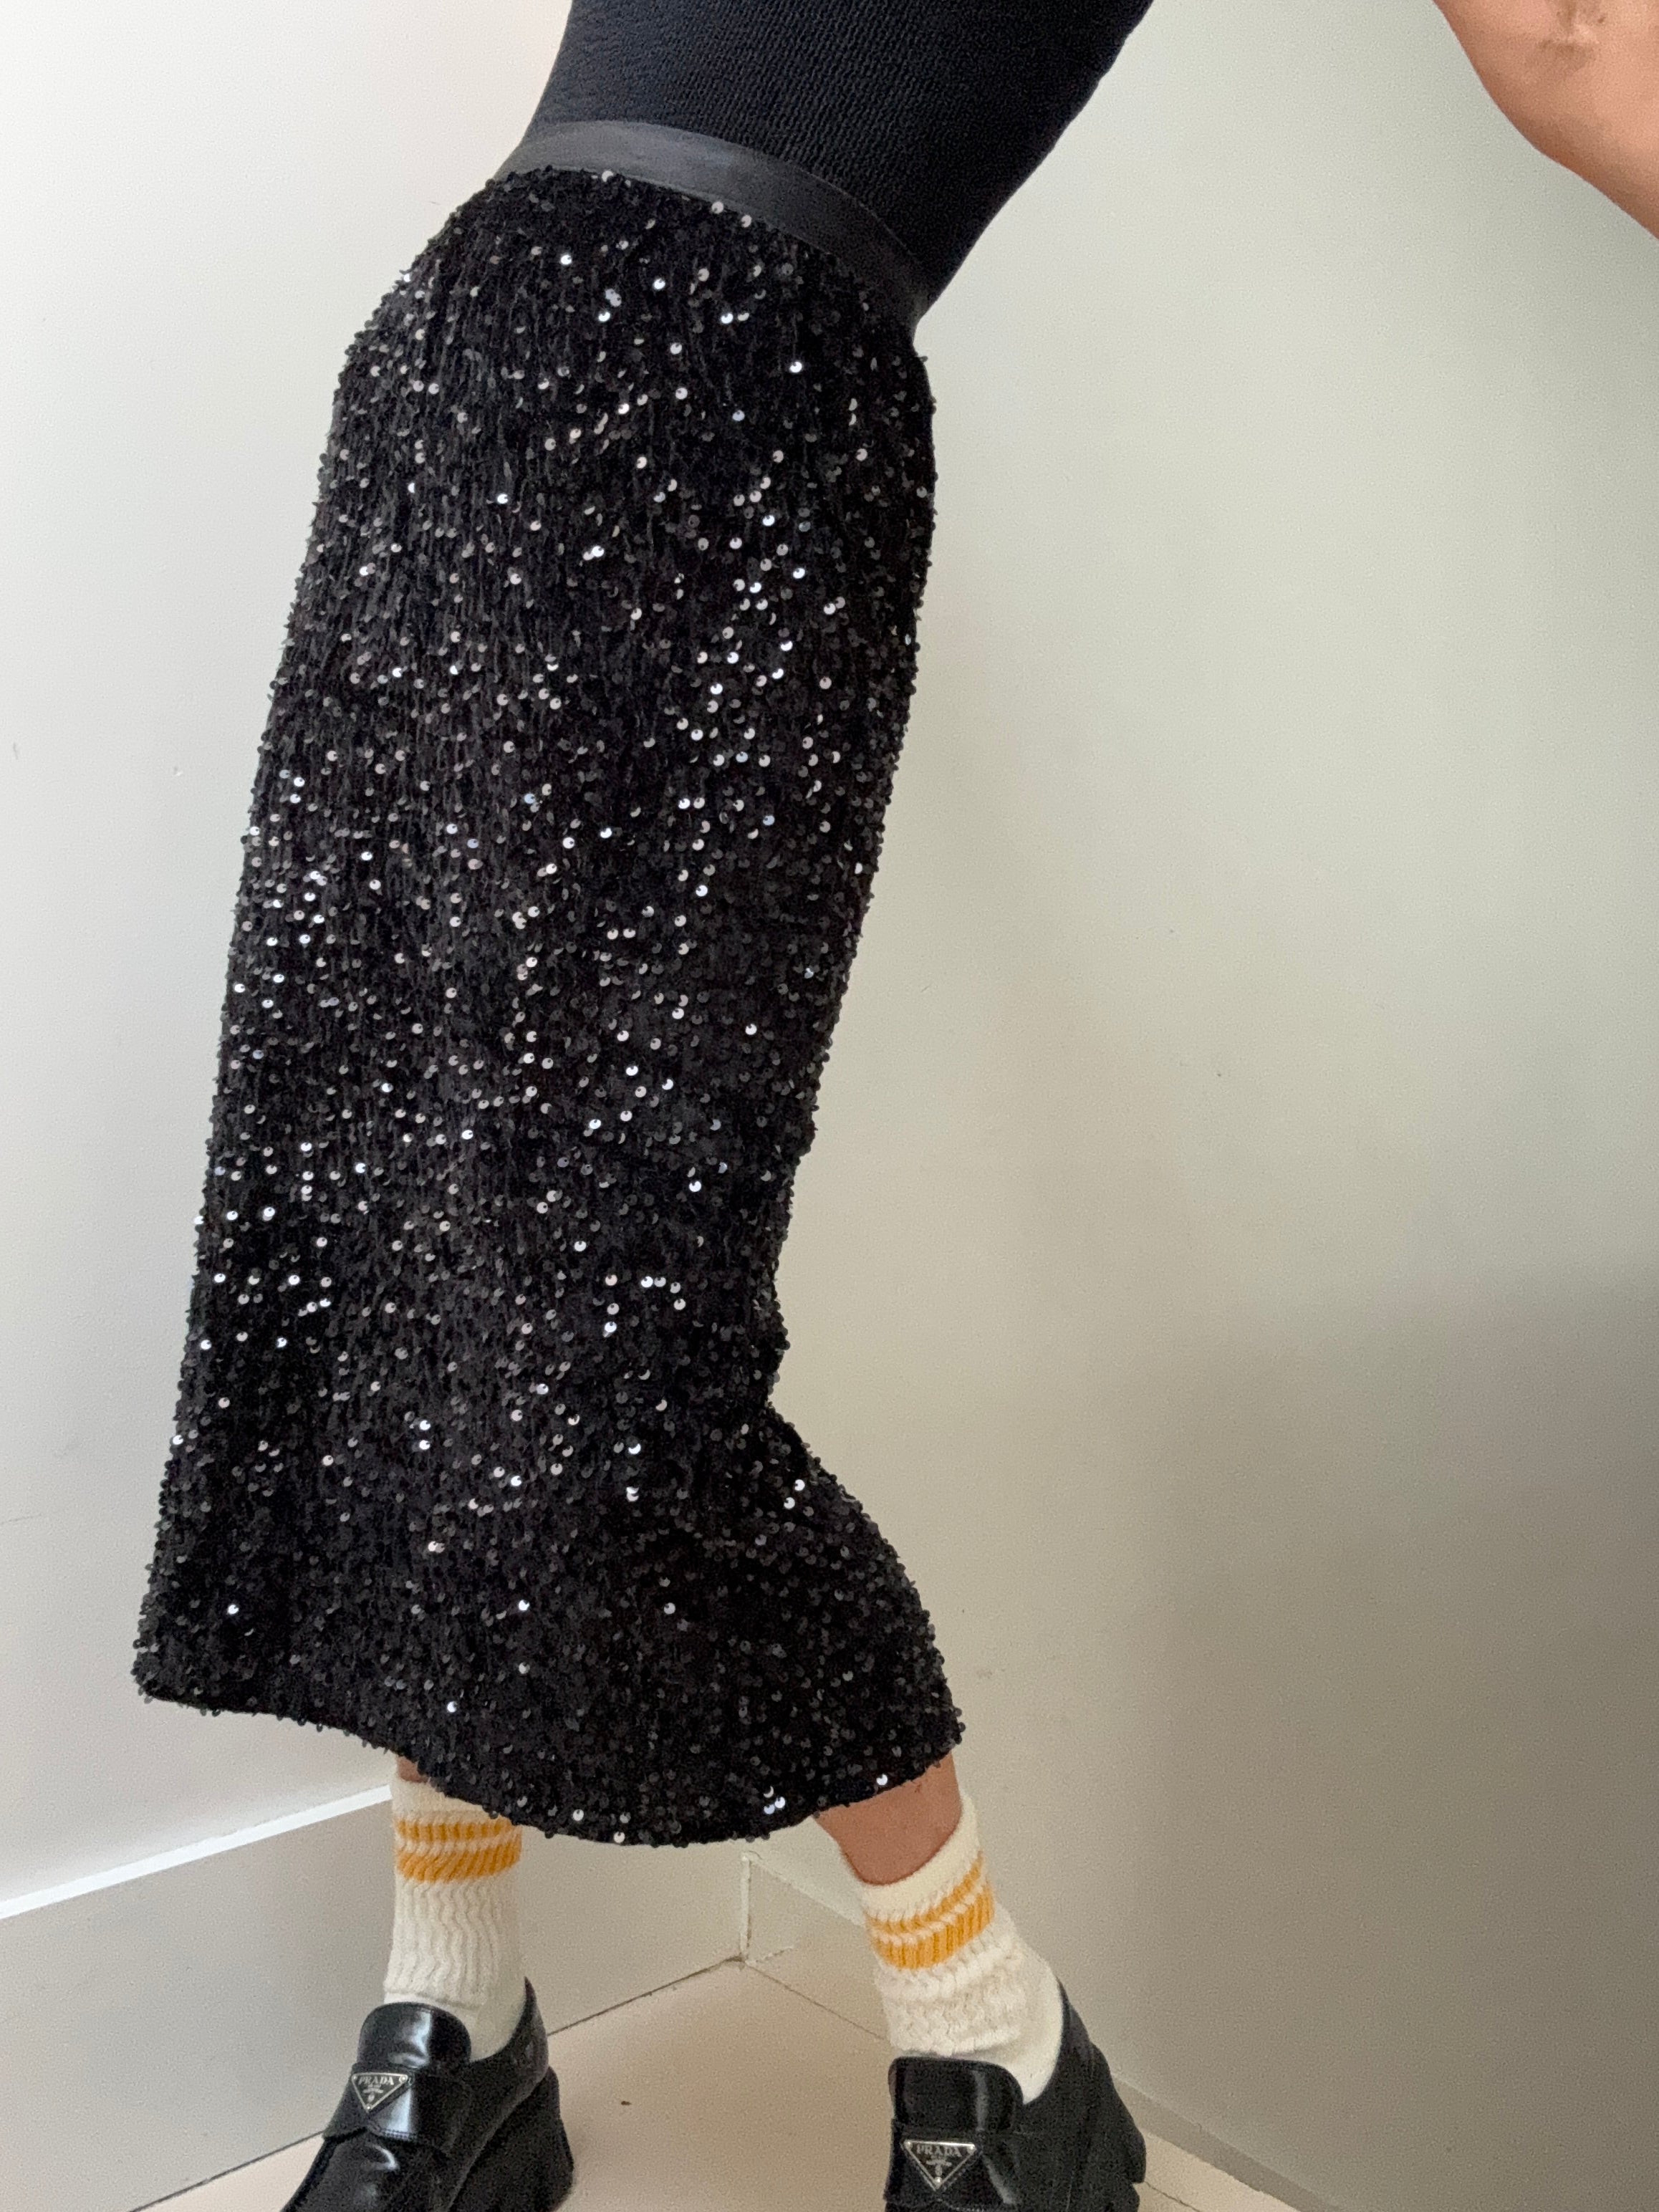 Jetsetbohemian Skirts Small-Medium Black on Black Sequin Midi Skirt